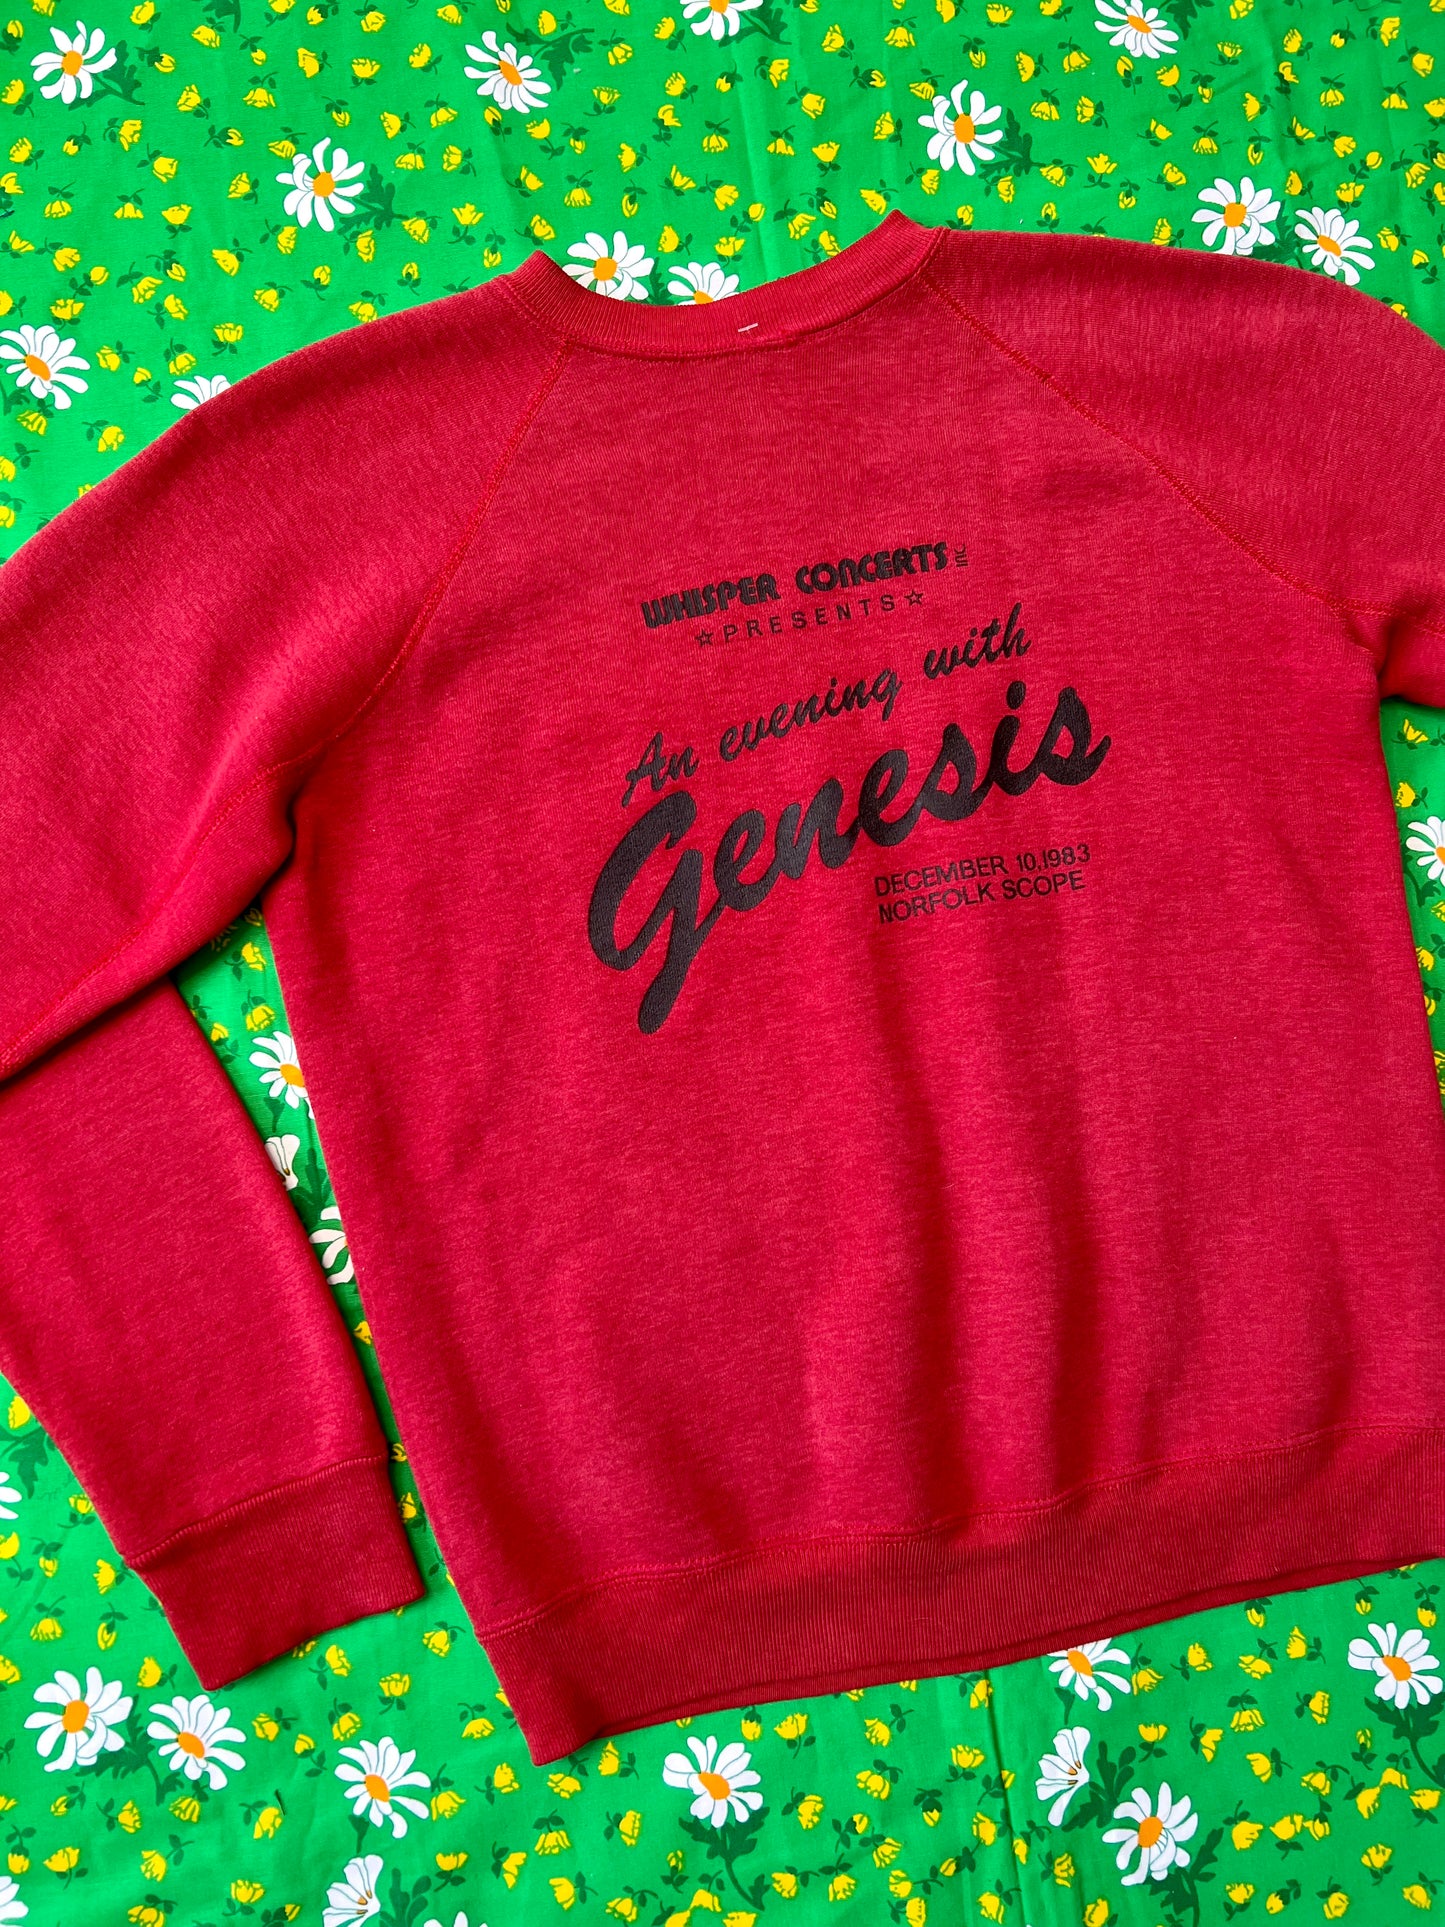 1983 Whisper Concerts Genesis Sweatshirt